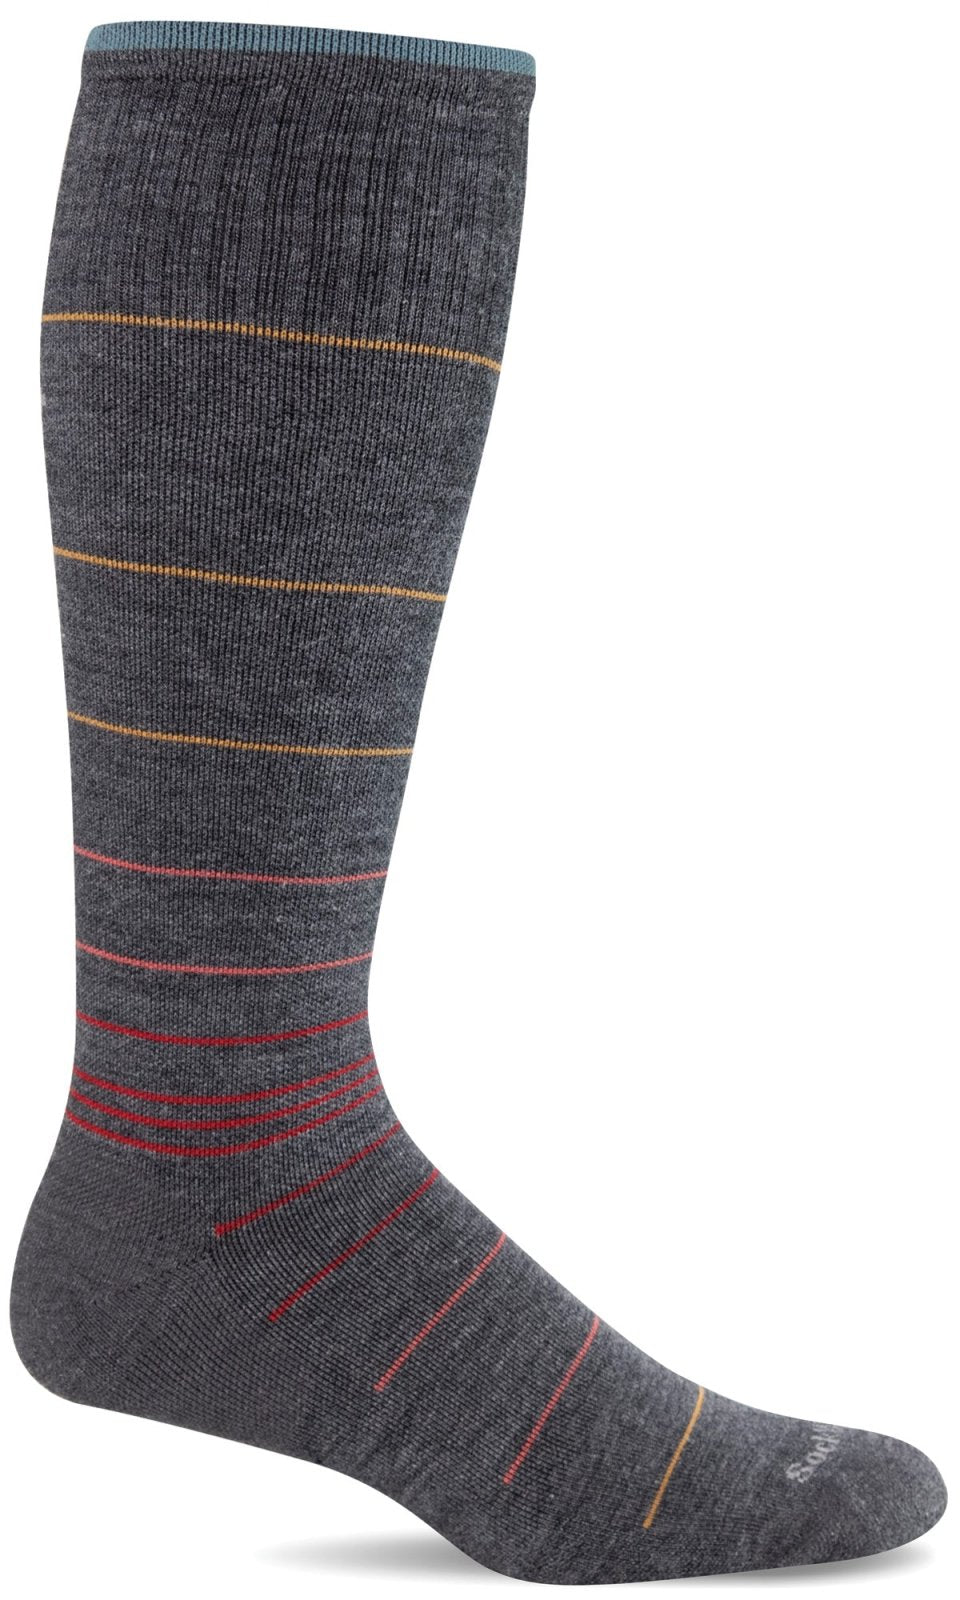 Men's Circulator | Moderate Graduated Compression Socks - Merino Wool Lifestyle Compression - Sockwell